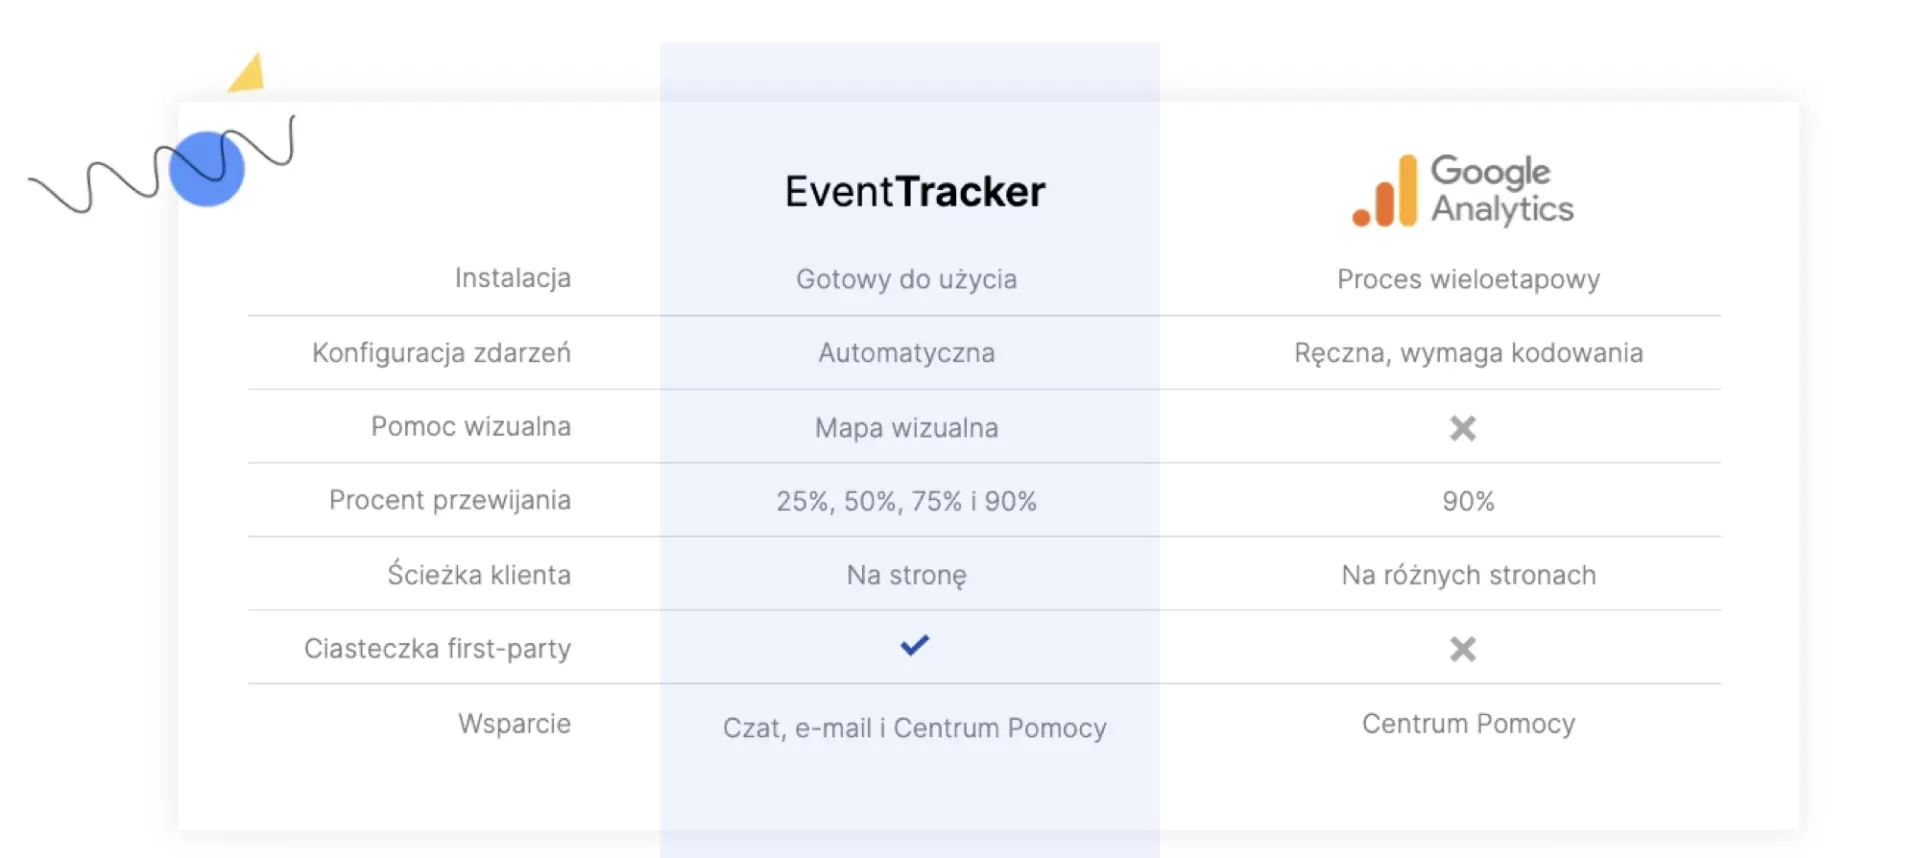 EventTracker vs Google Analytics 4